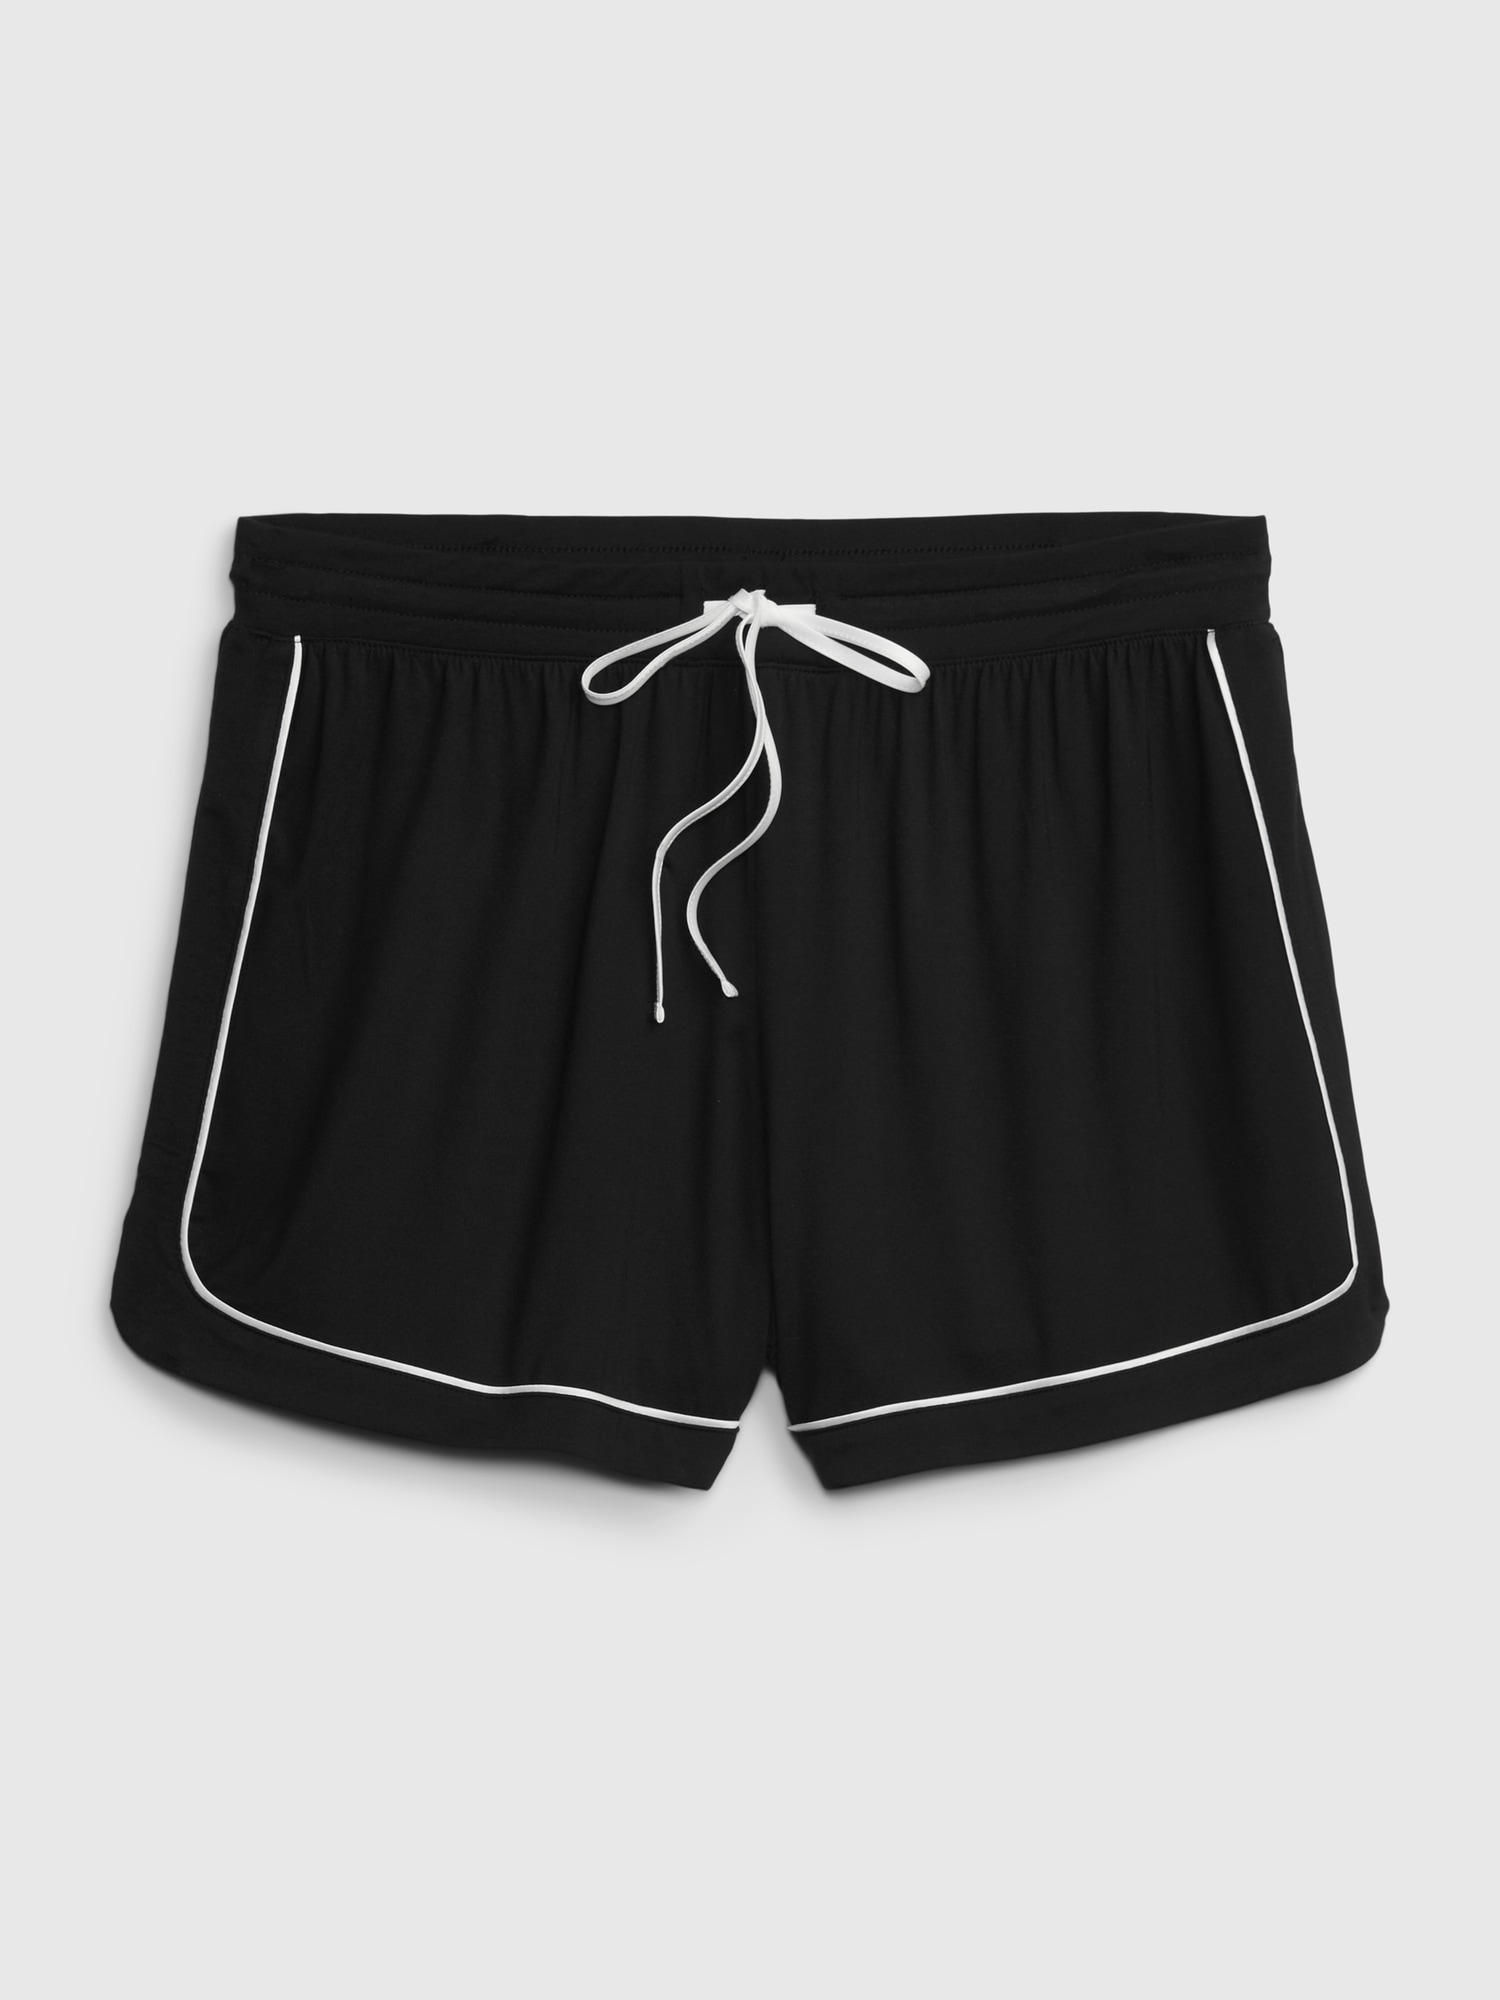 Linen Shorts Women, White Shorts, Pajama Shorts, Gift for Her, Sexy Ruffle  Shorts, Mini Shorts, Linen Loungewear, Summer Linen Shorts -  Canada